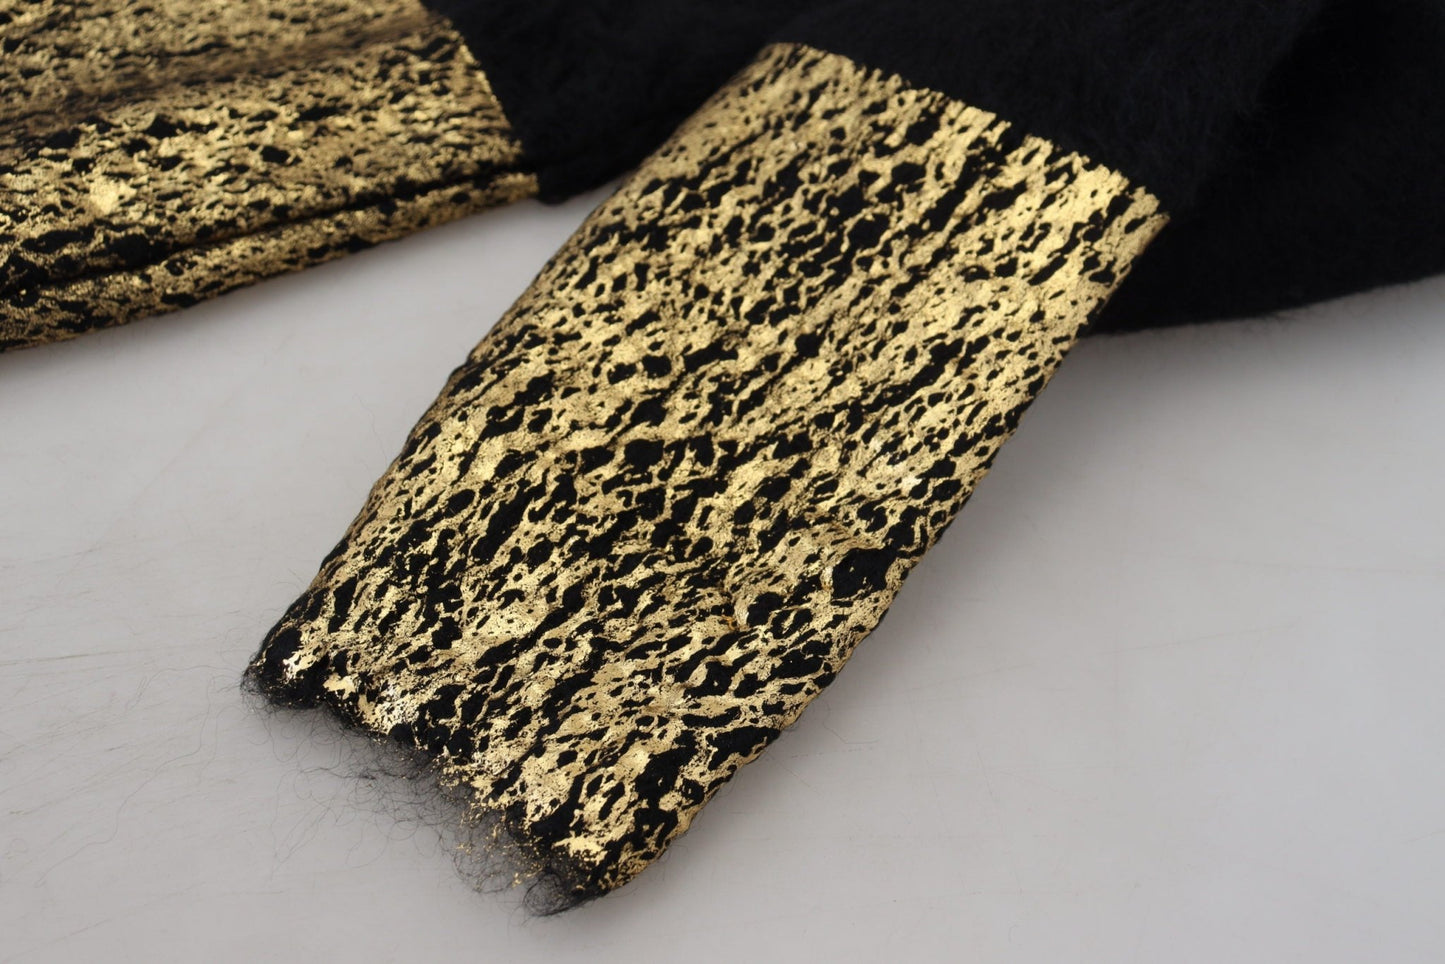 Dolce & Gabbana Black Gold Turtleneck Mohair Pullover Mens Sweater